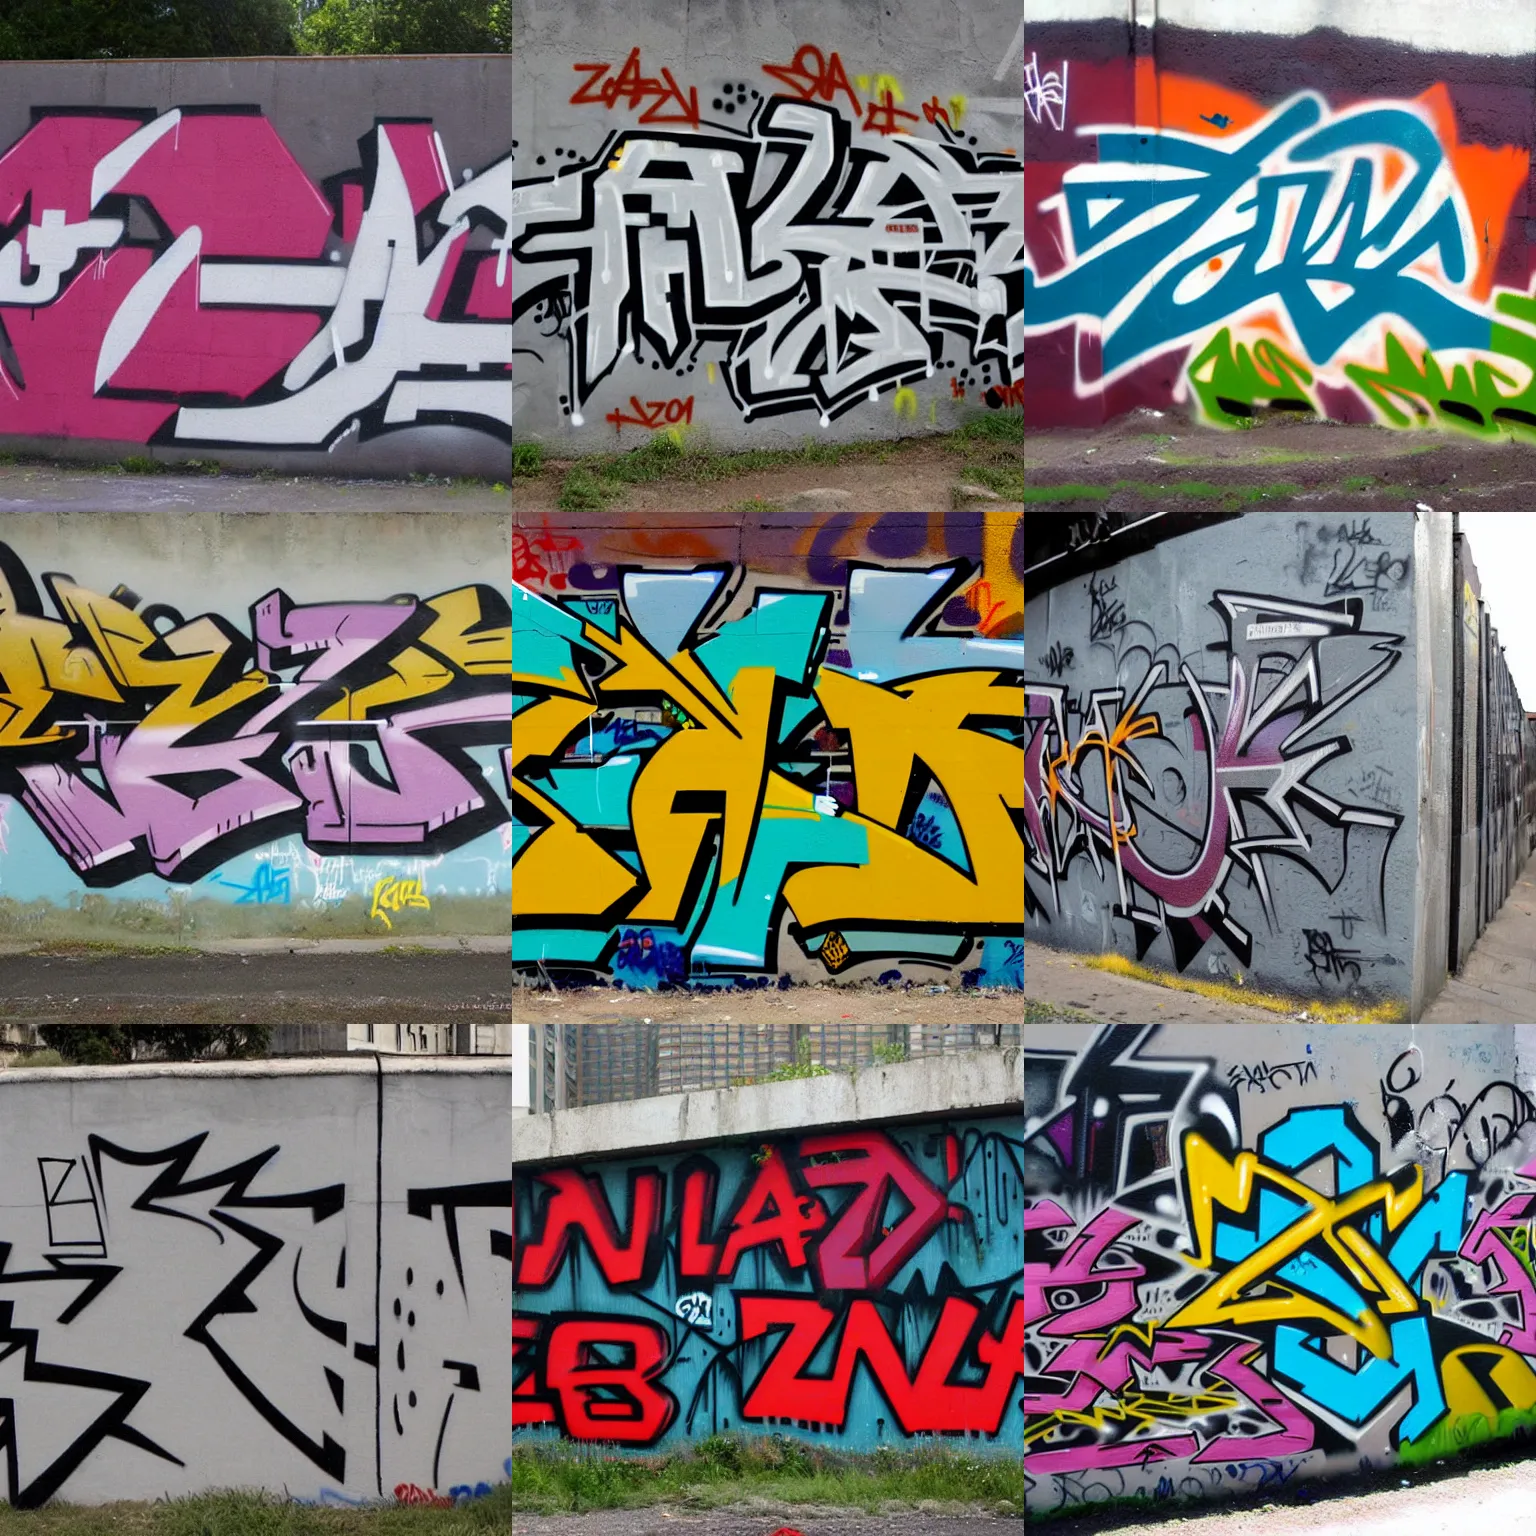 Prompt: graffiti of the word zatla, brutalist style, ignorant